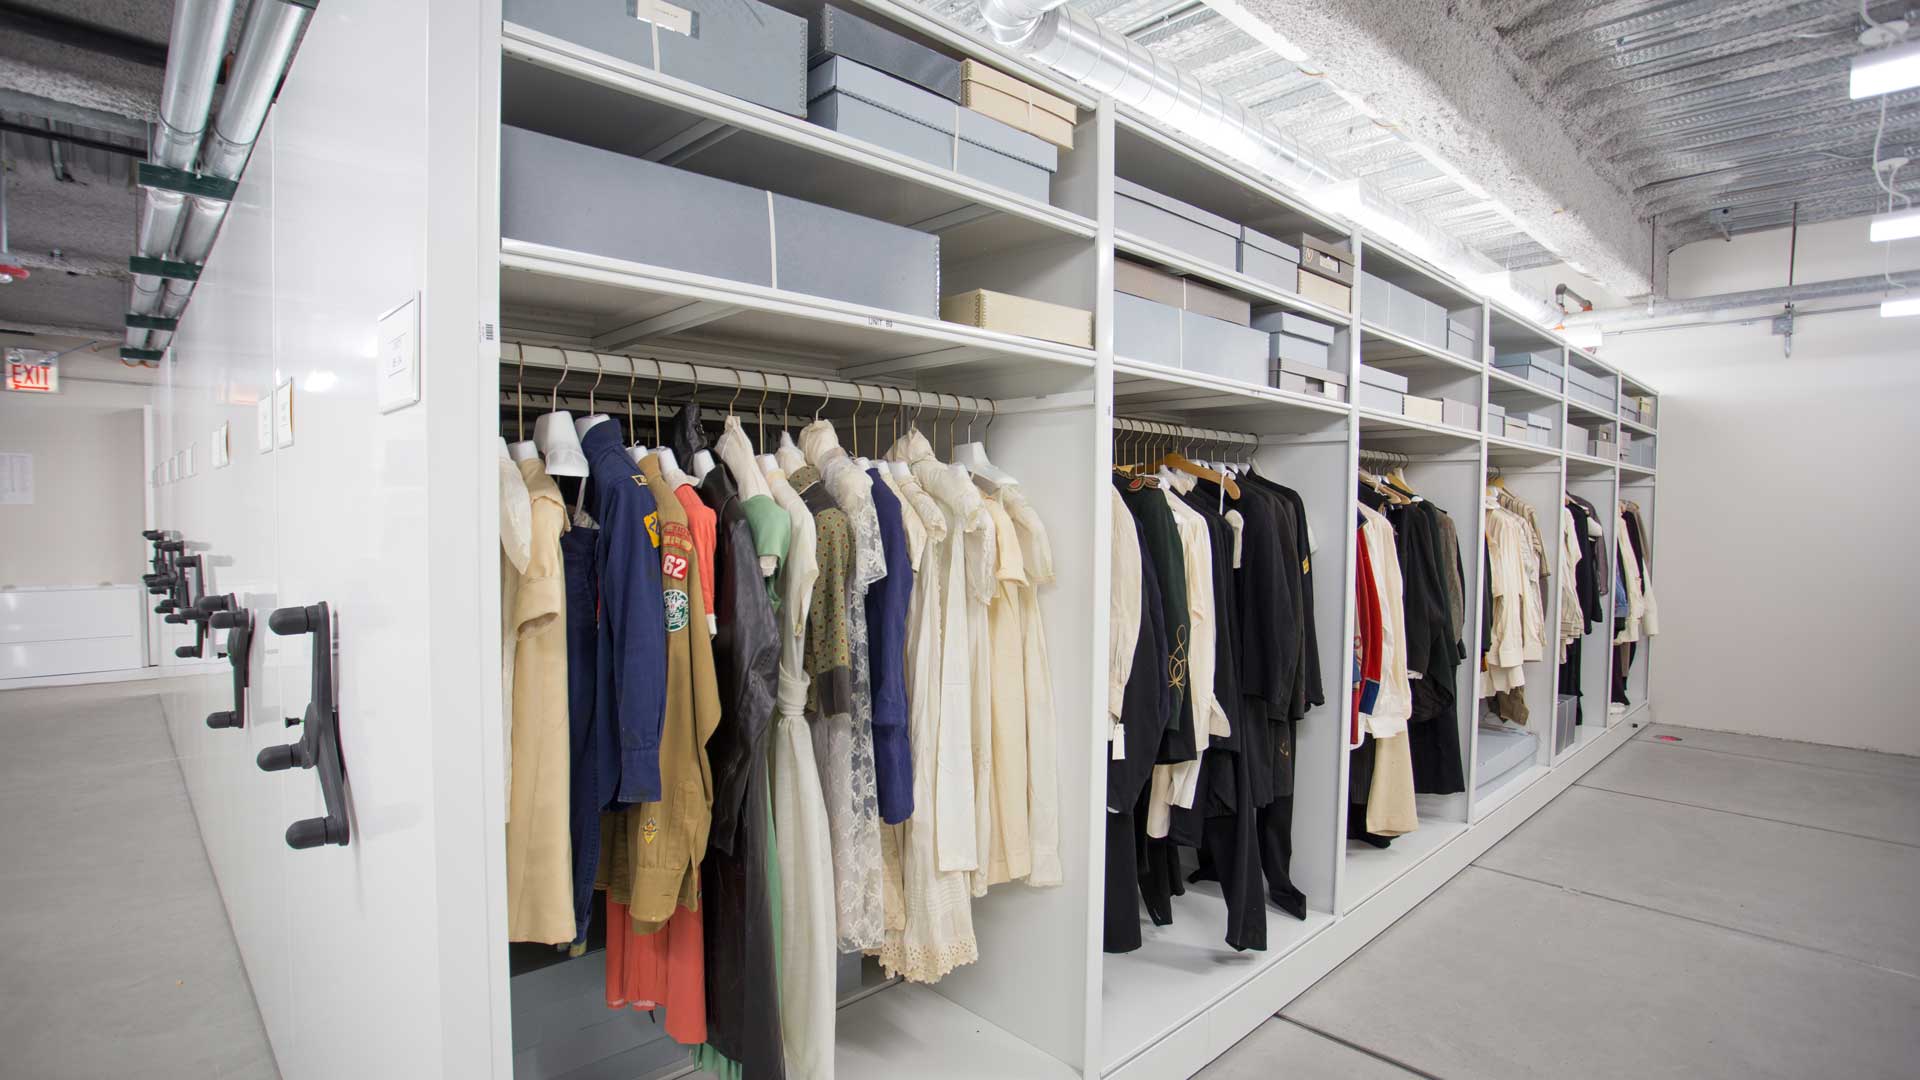 garment storage systems featured